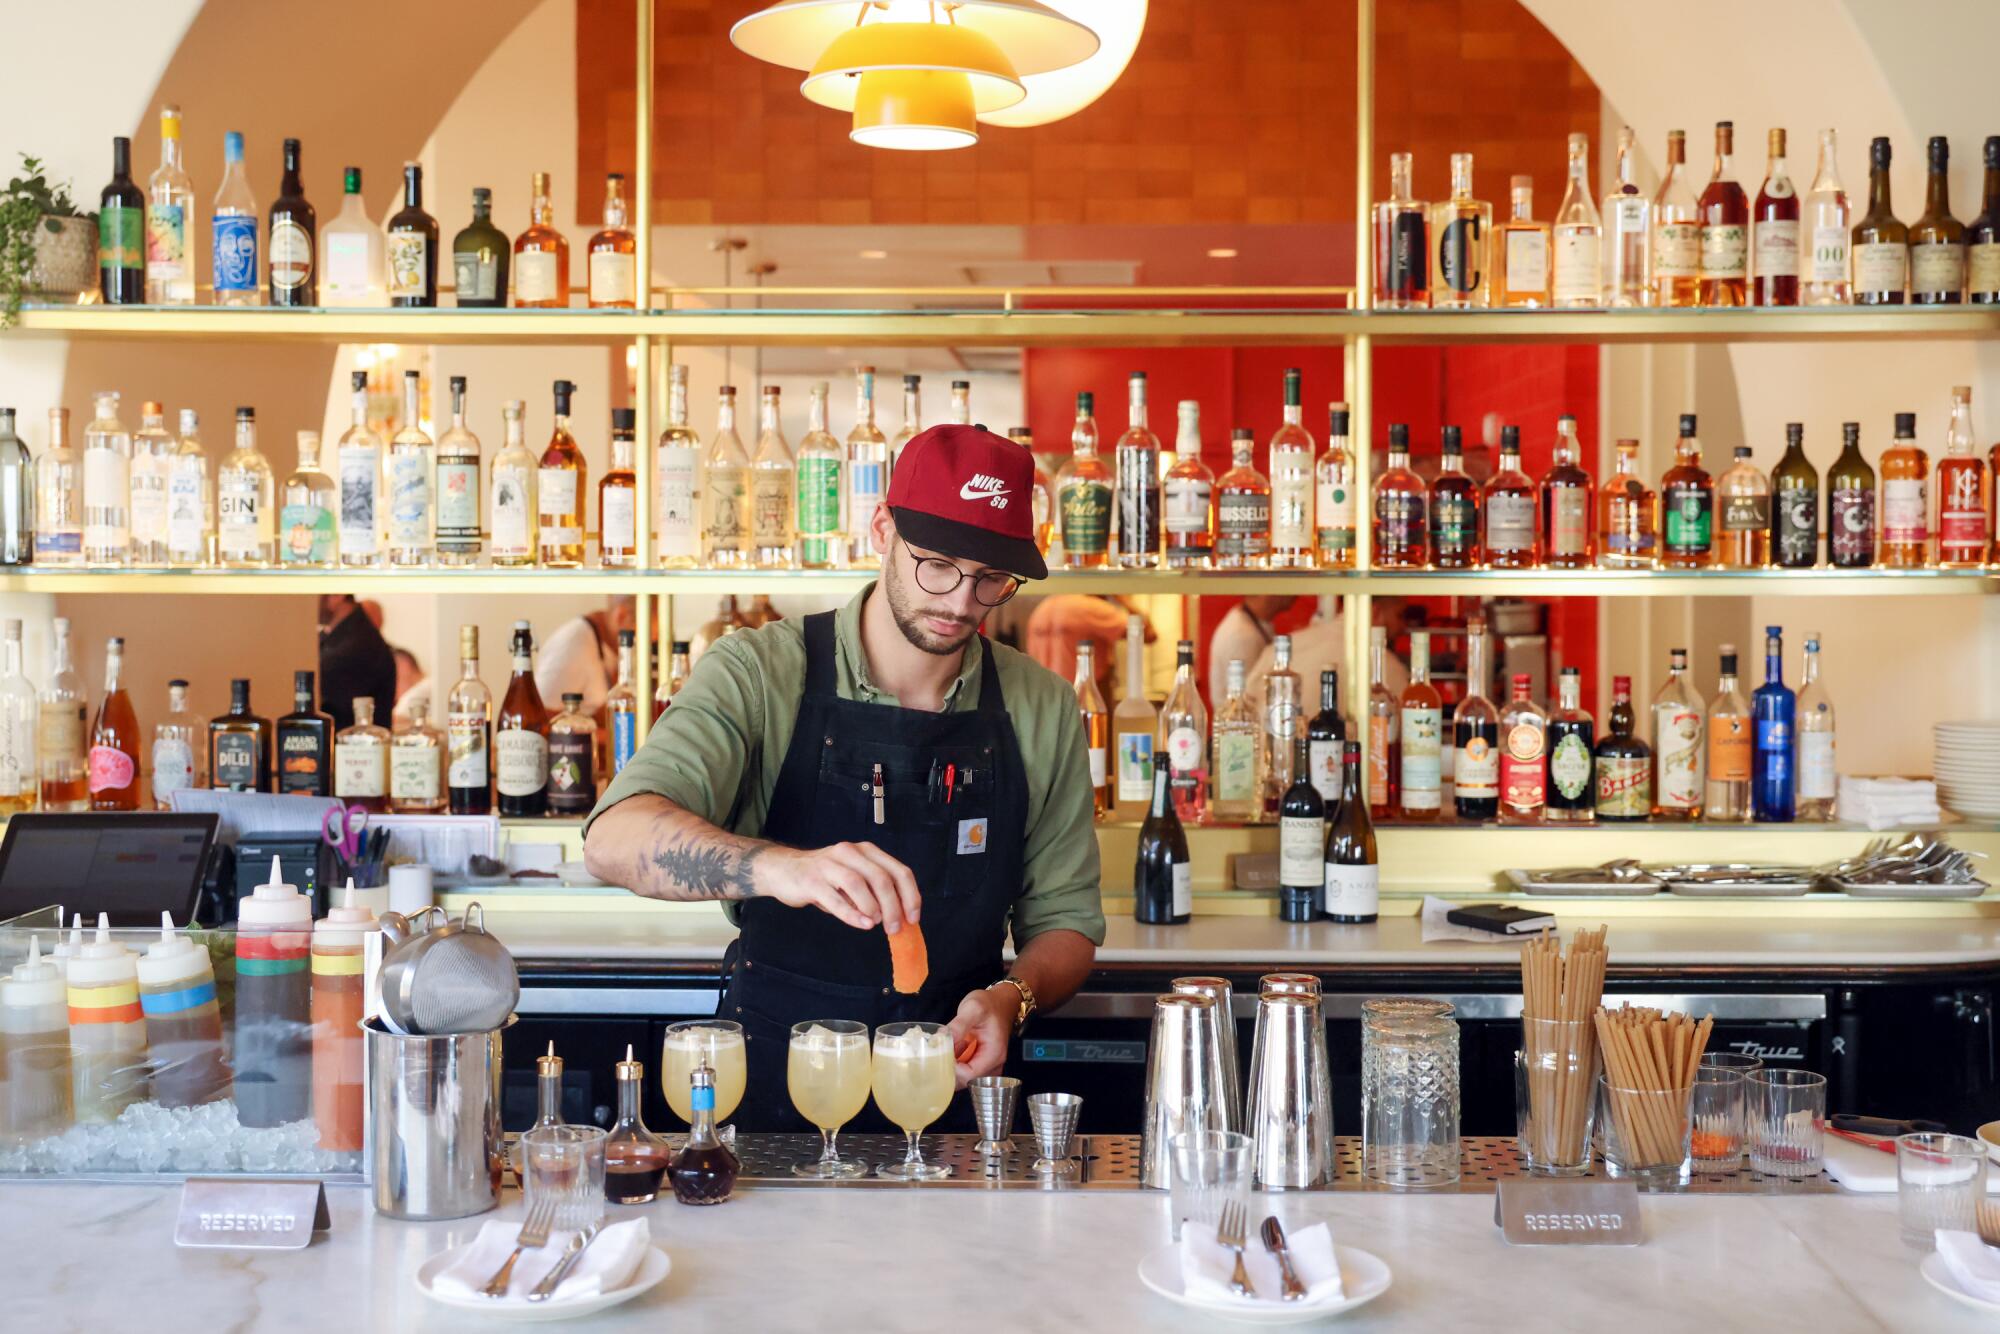 Grayson Hestir prepares cocktails at a bar.